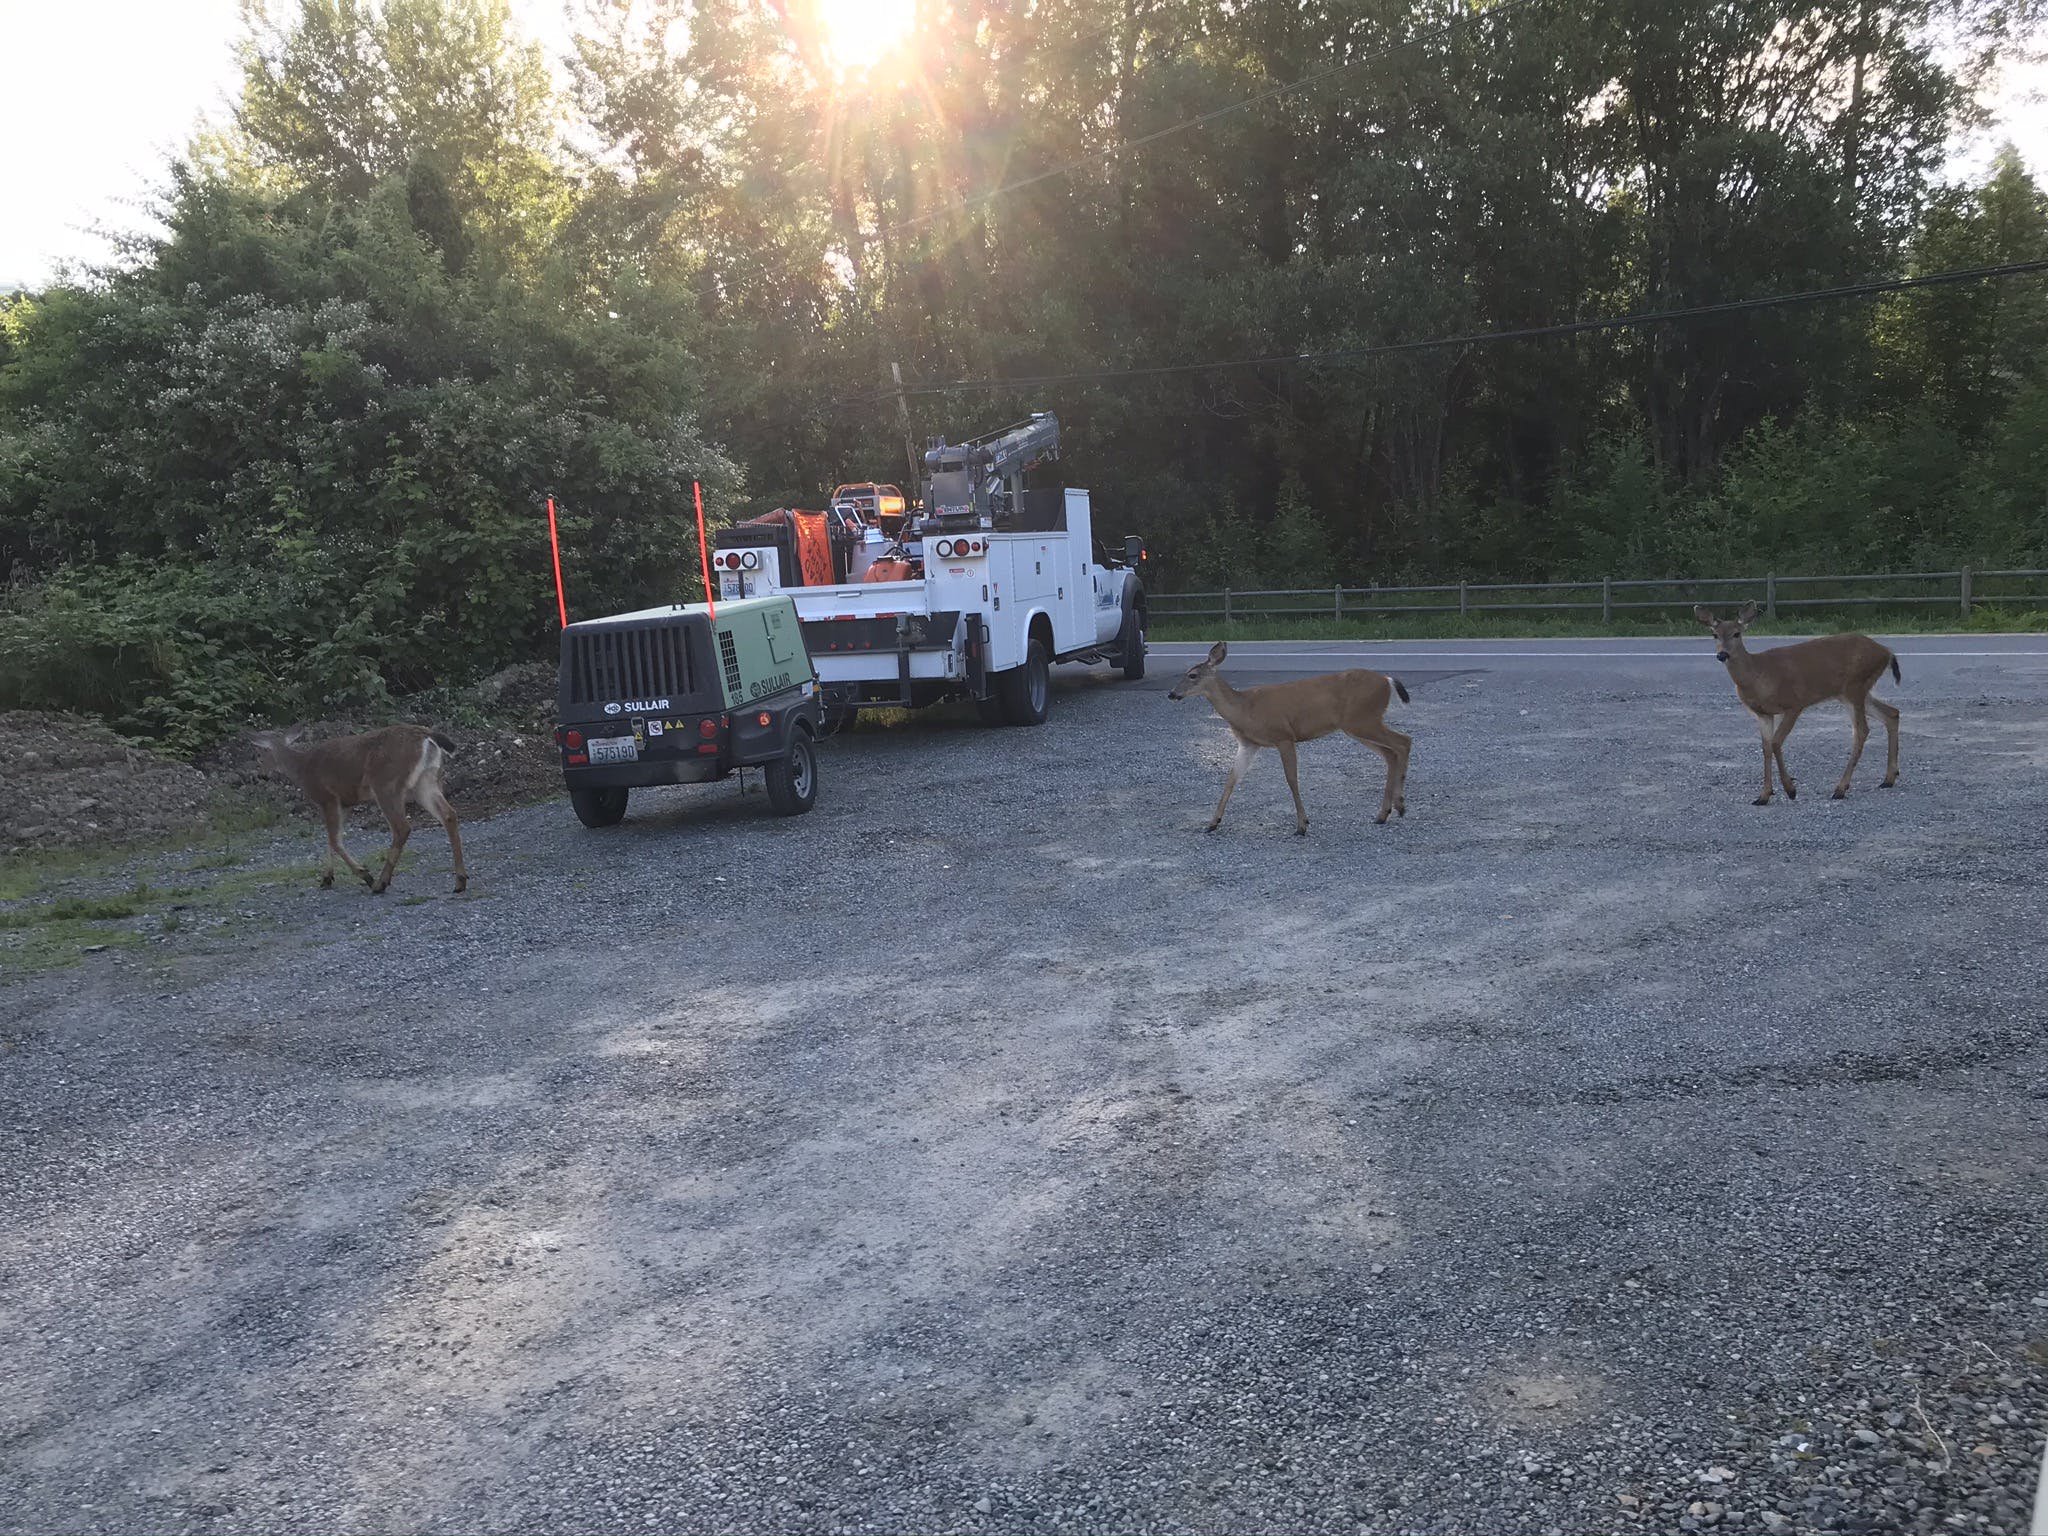 Three deer walk past the crew members' truck just north of Ebright Creek in Sammamish.